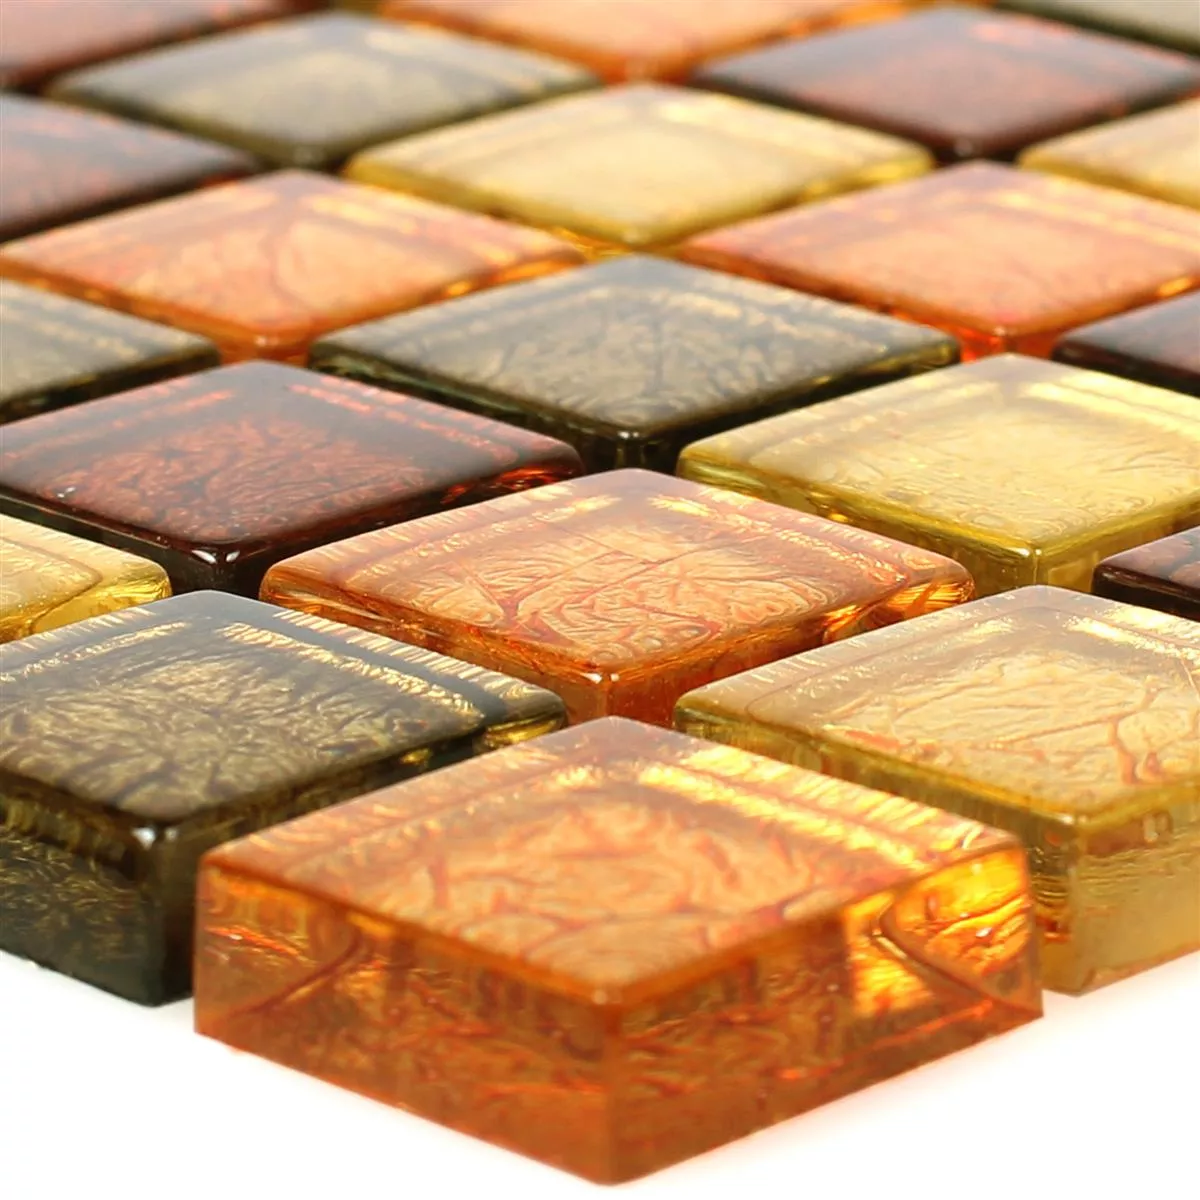 Mozaic De Sticlă Gresie Curlew Galben Portocale 23